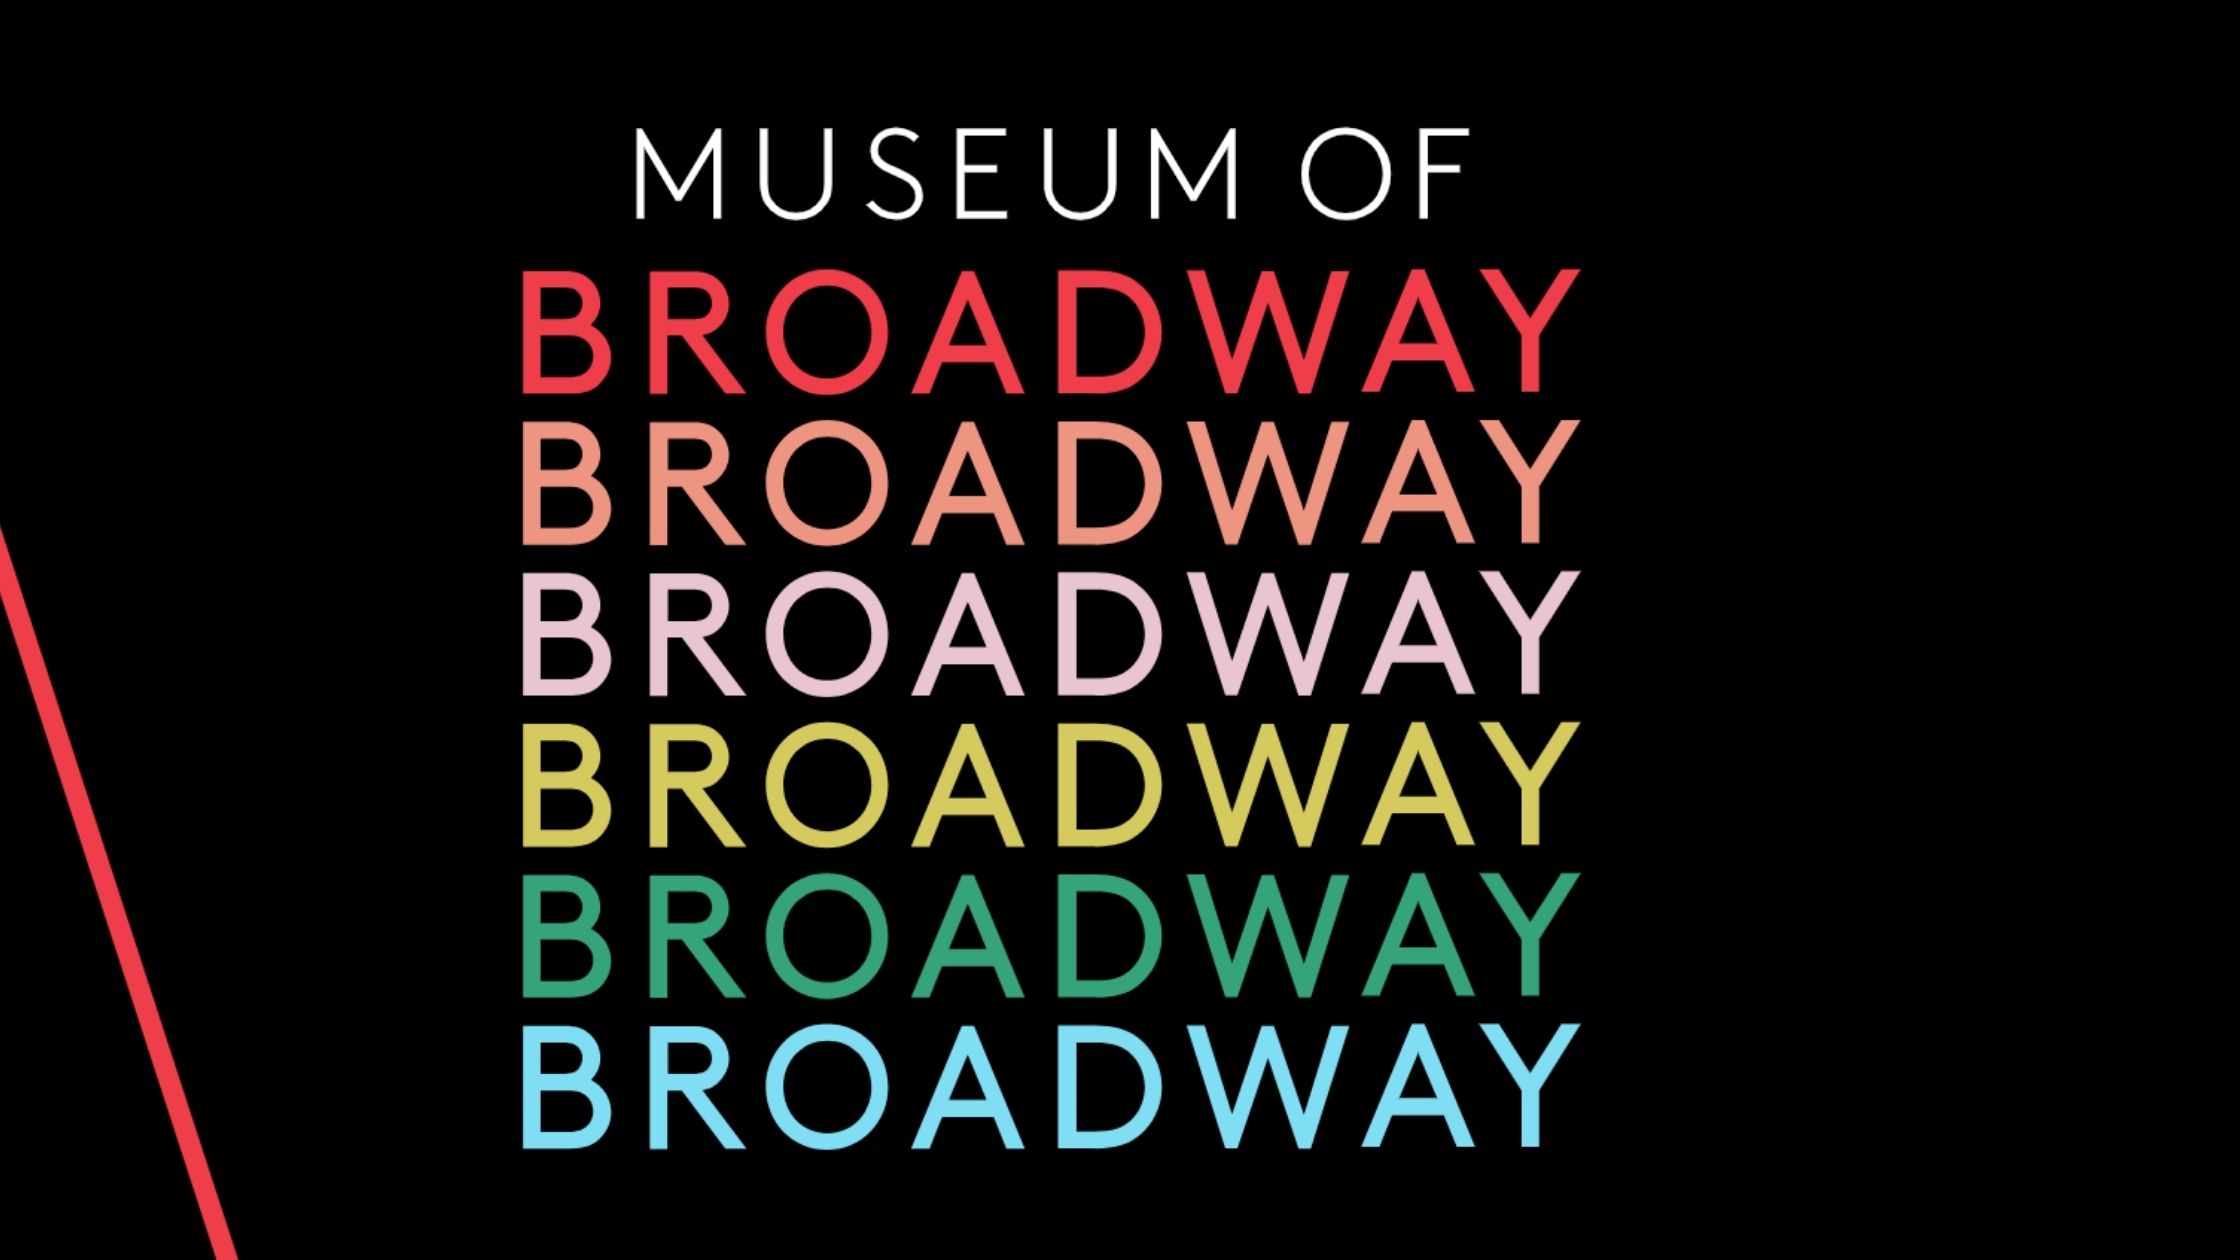 Museum of Broadway to Open Next Summer